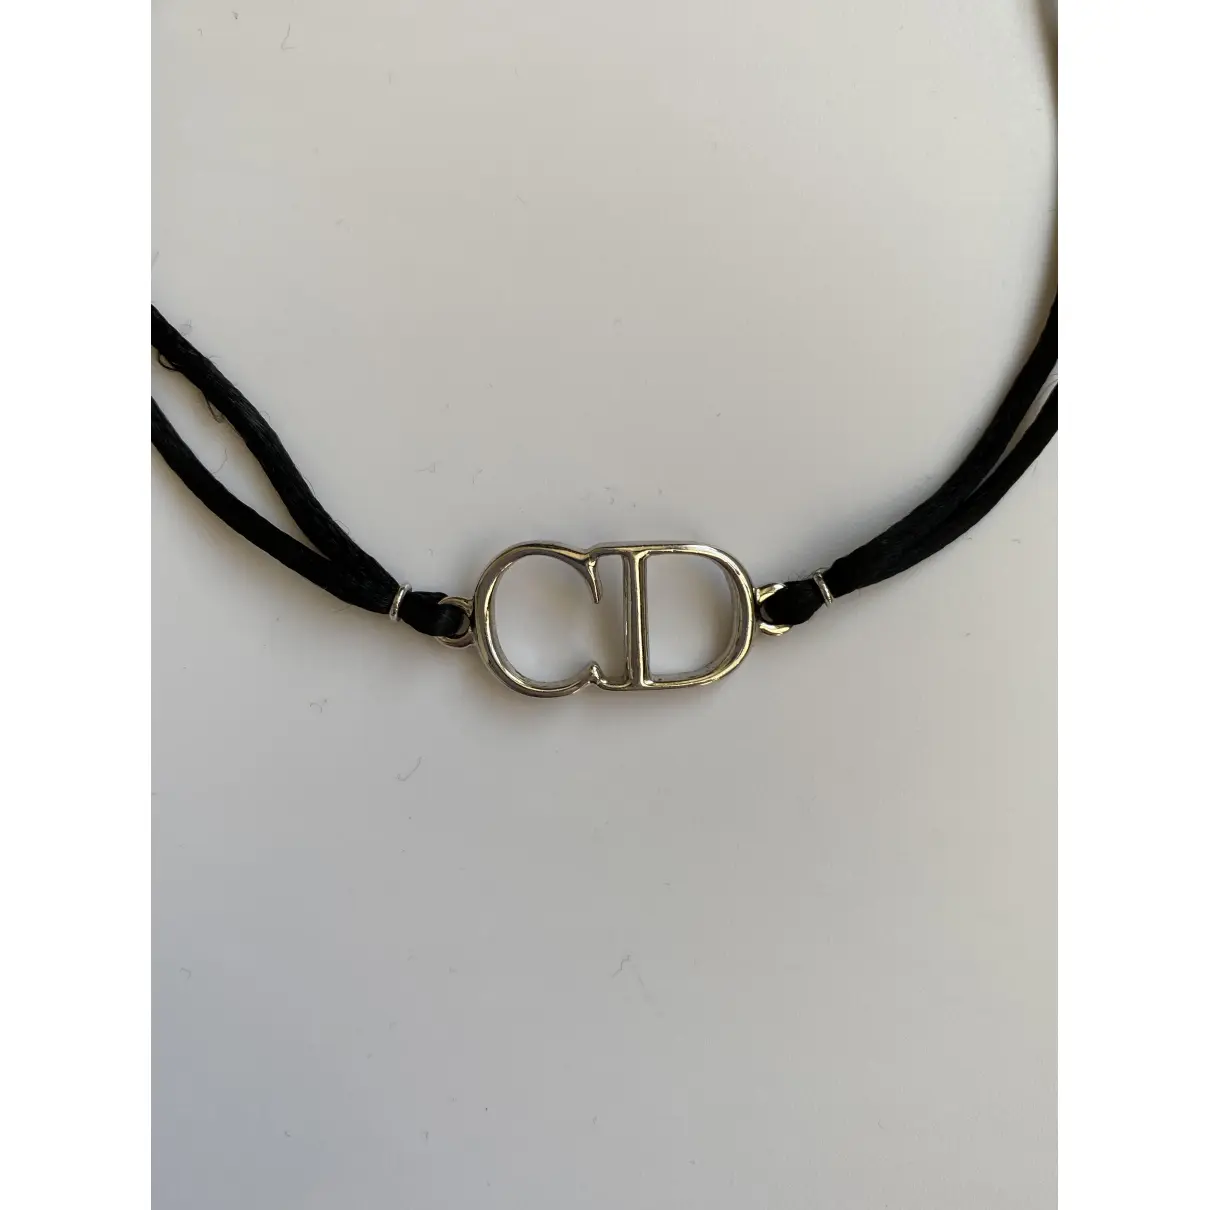 Buy Dior Necklace online - Vintage